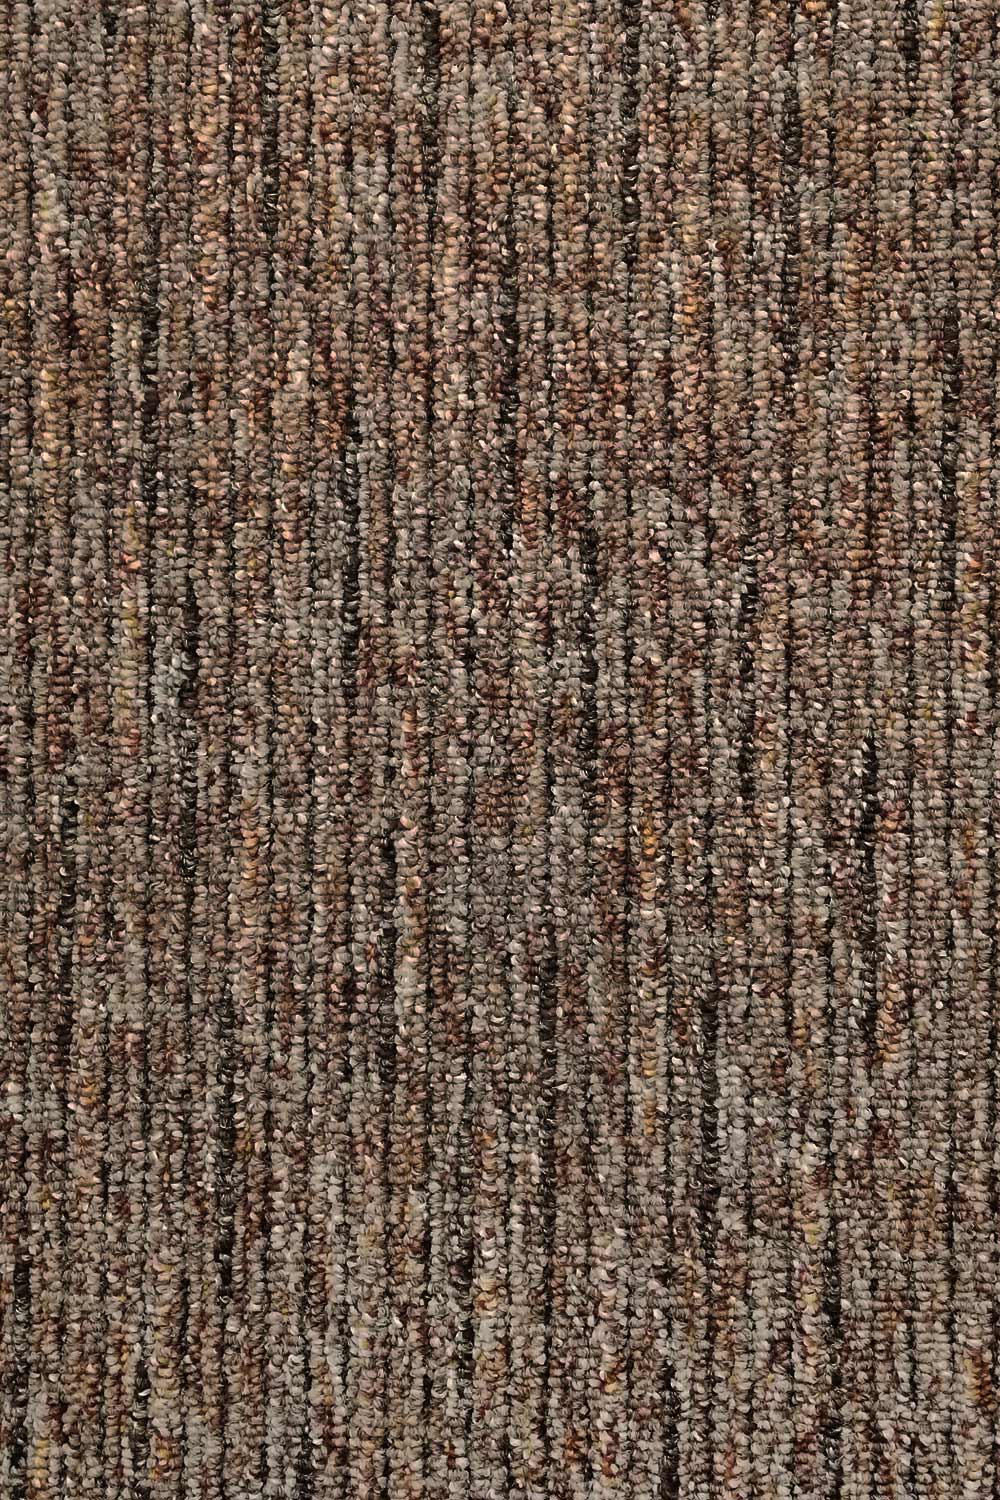 Metrážový koberec Stainsafe Woodlands 900